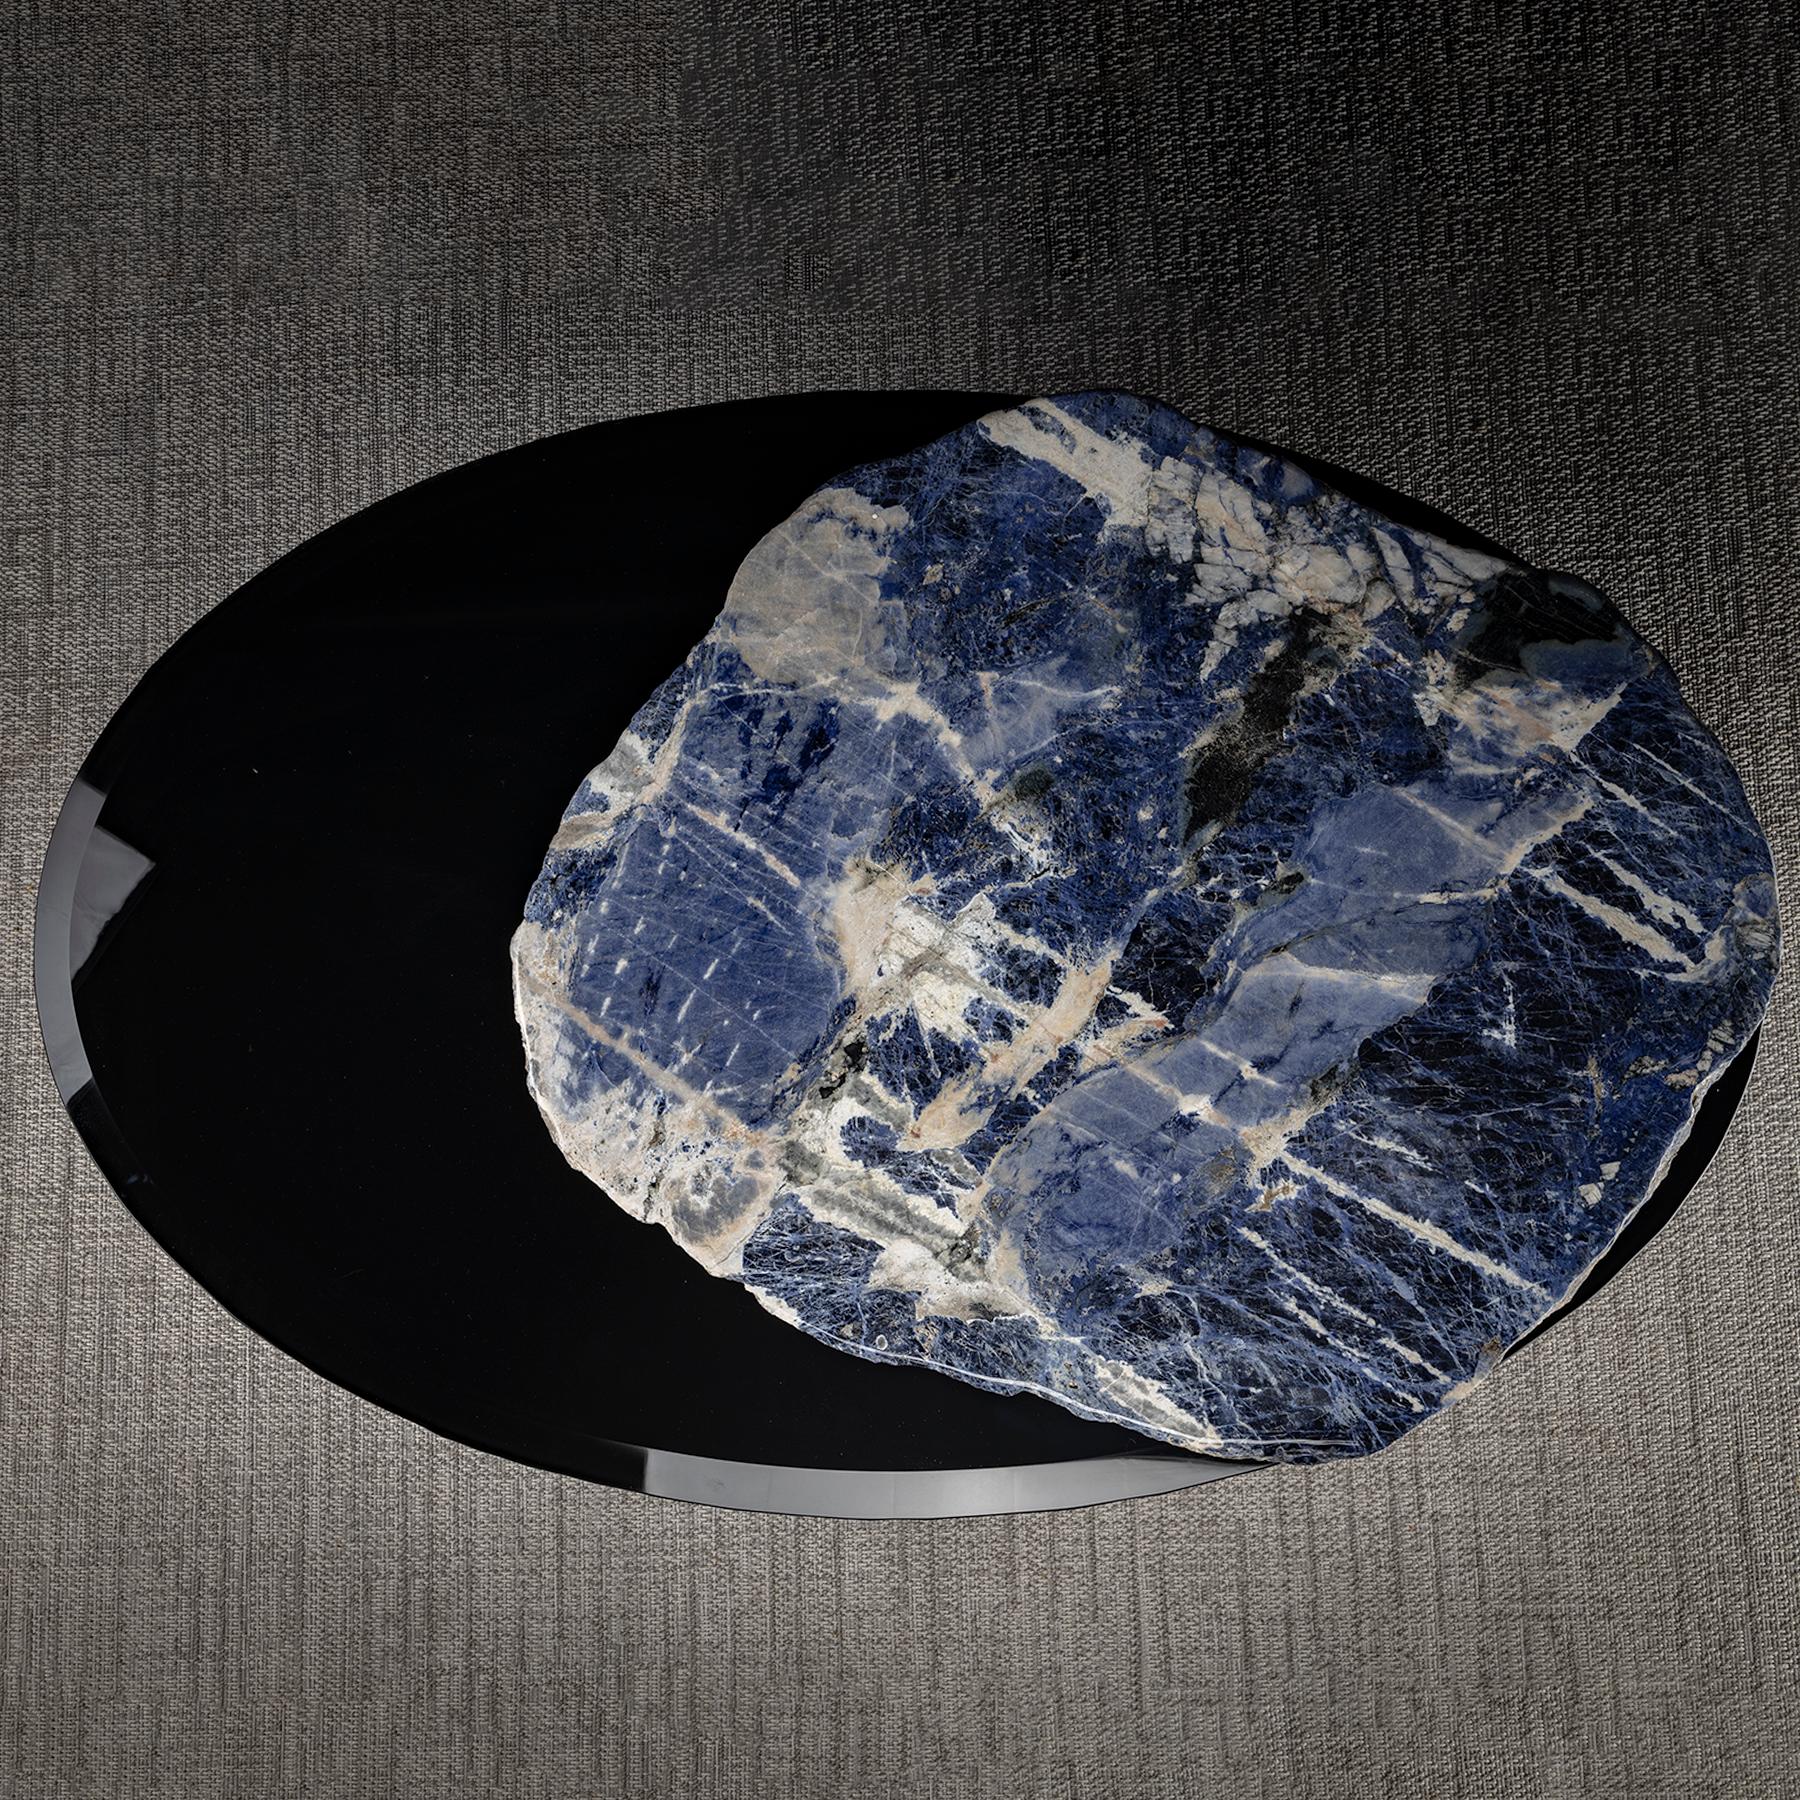 Organic Modern Center Table, with Rotating Brazilian Sodalite Slab on Black Tempered Glass